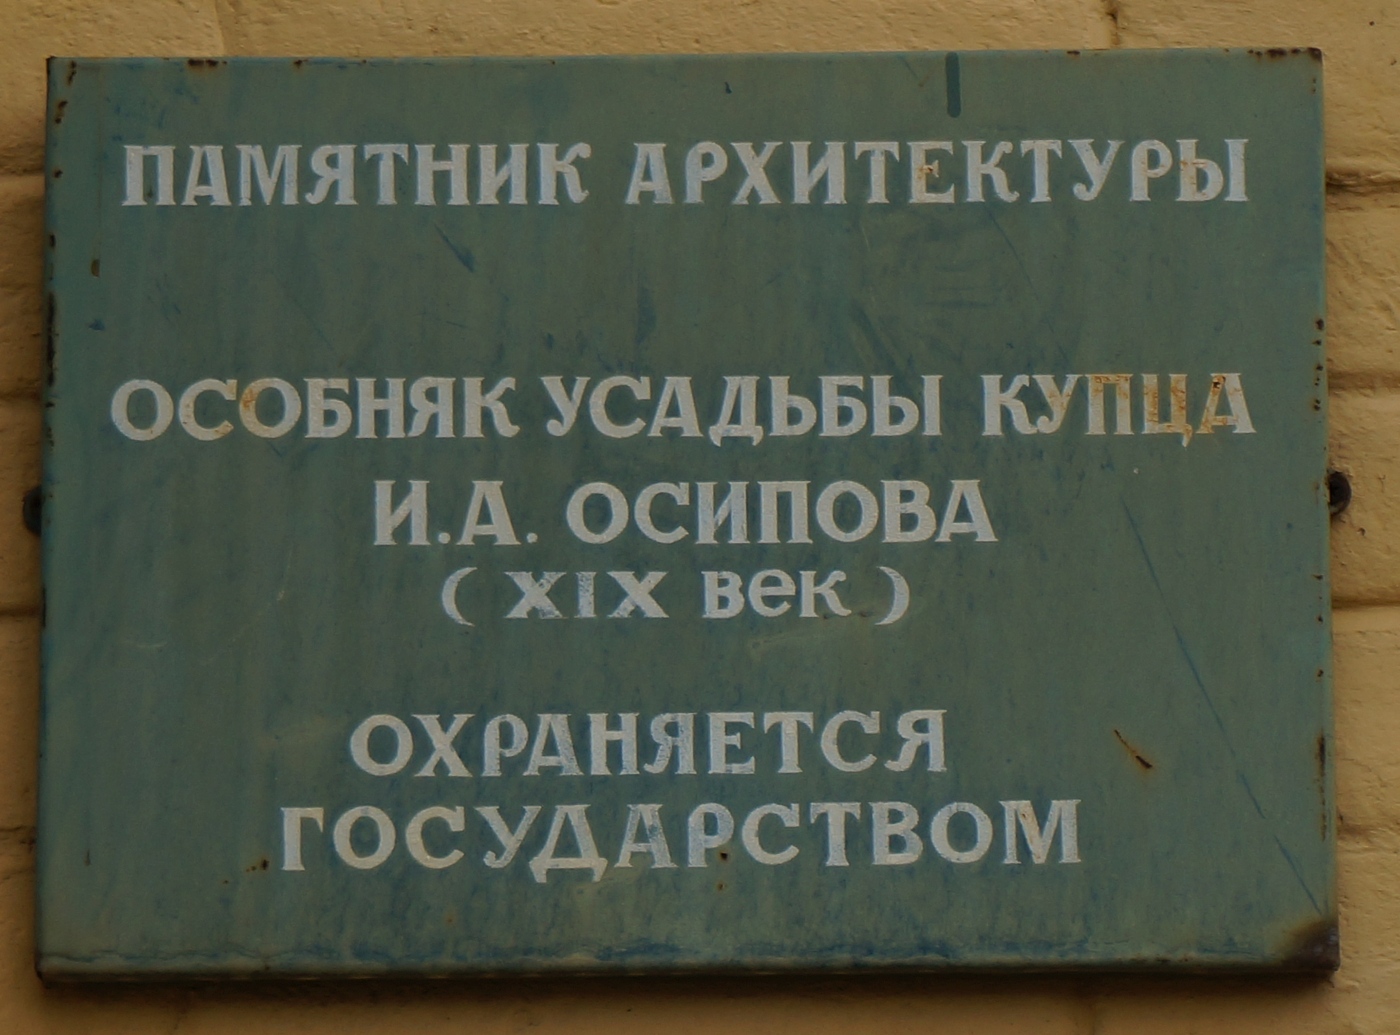 Osa, Улица Карла Маркса, 15. Osa — Security signs